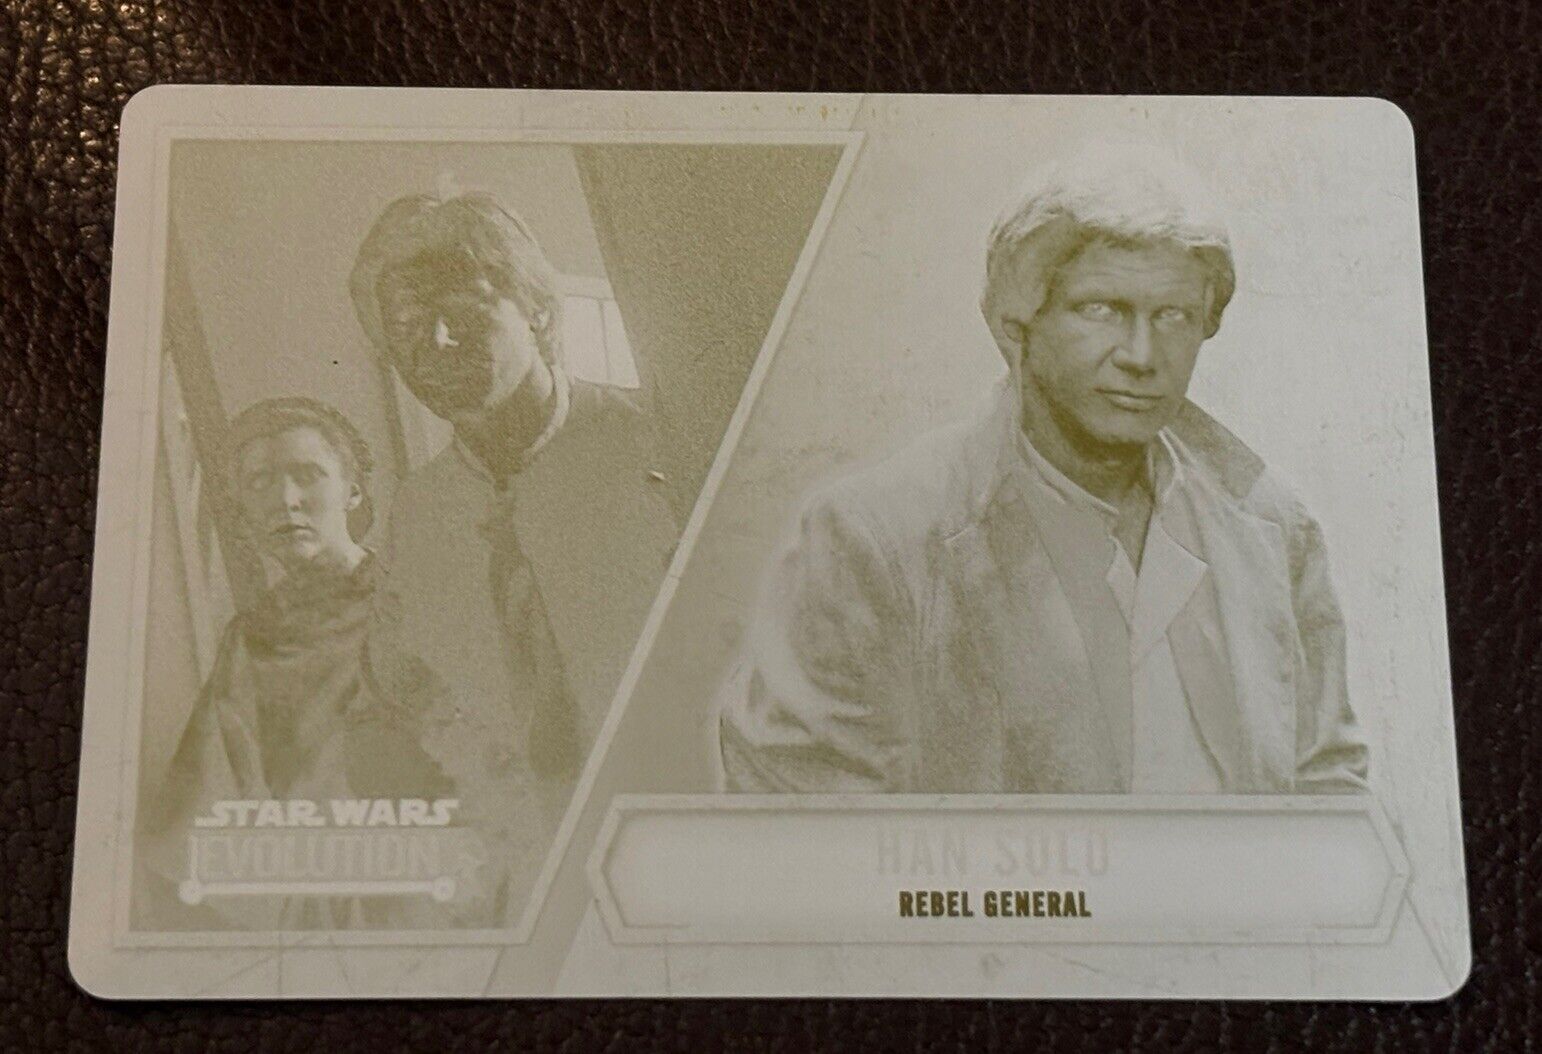 2016 Topps Star Wars Evolution Han Solo Printing Plate 1/1 Princess Leia Card 44